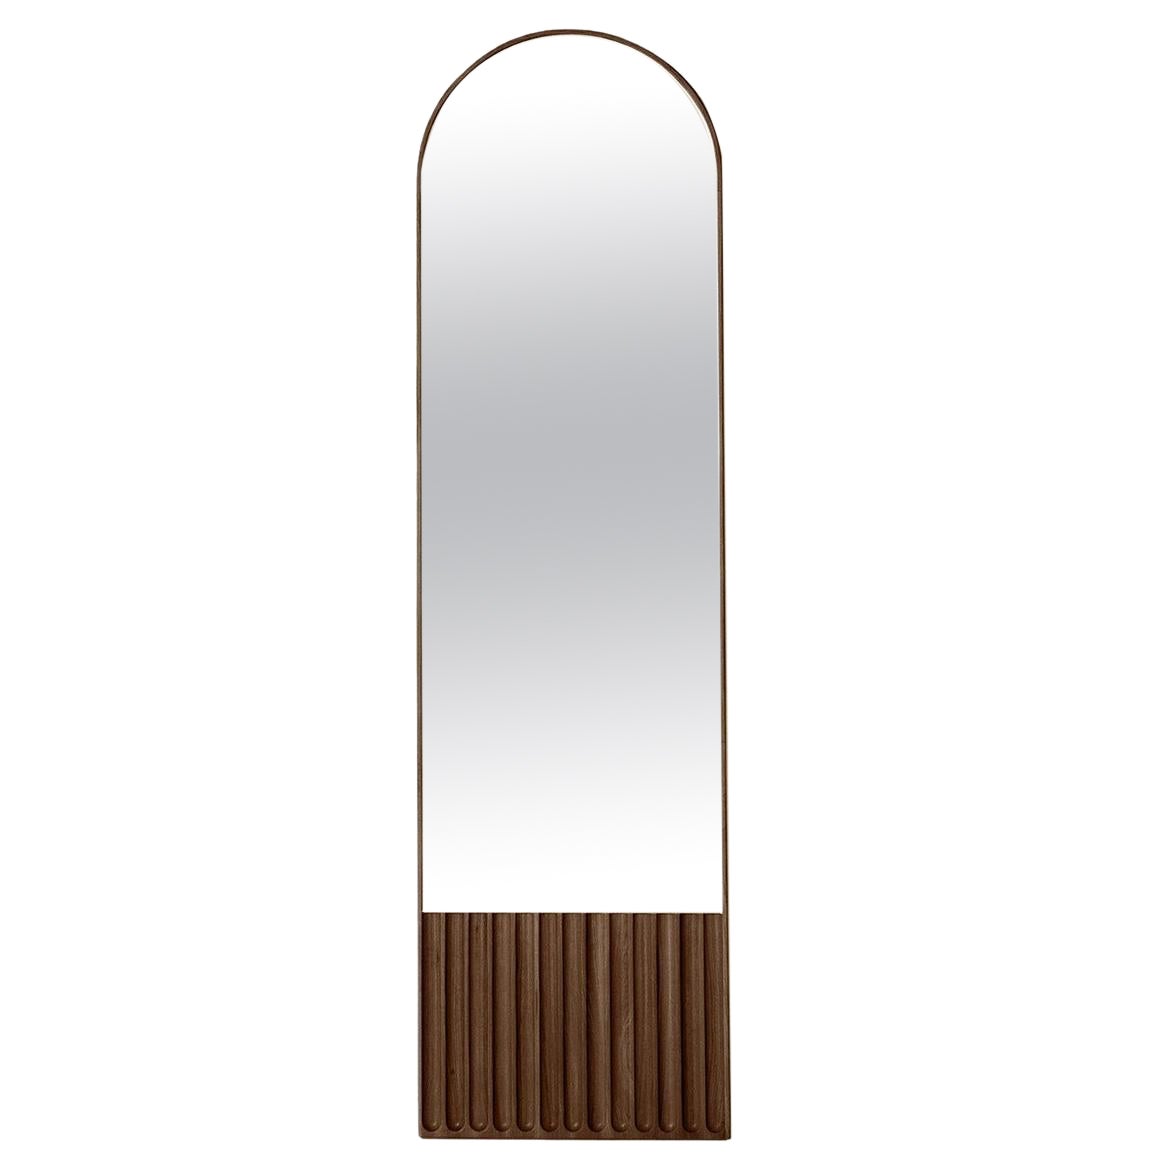 Miroir ovale Tutto Sesto en bois massif, finition frêne marron, contemporain en vente